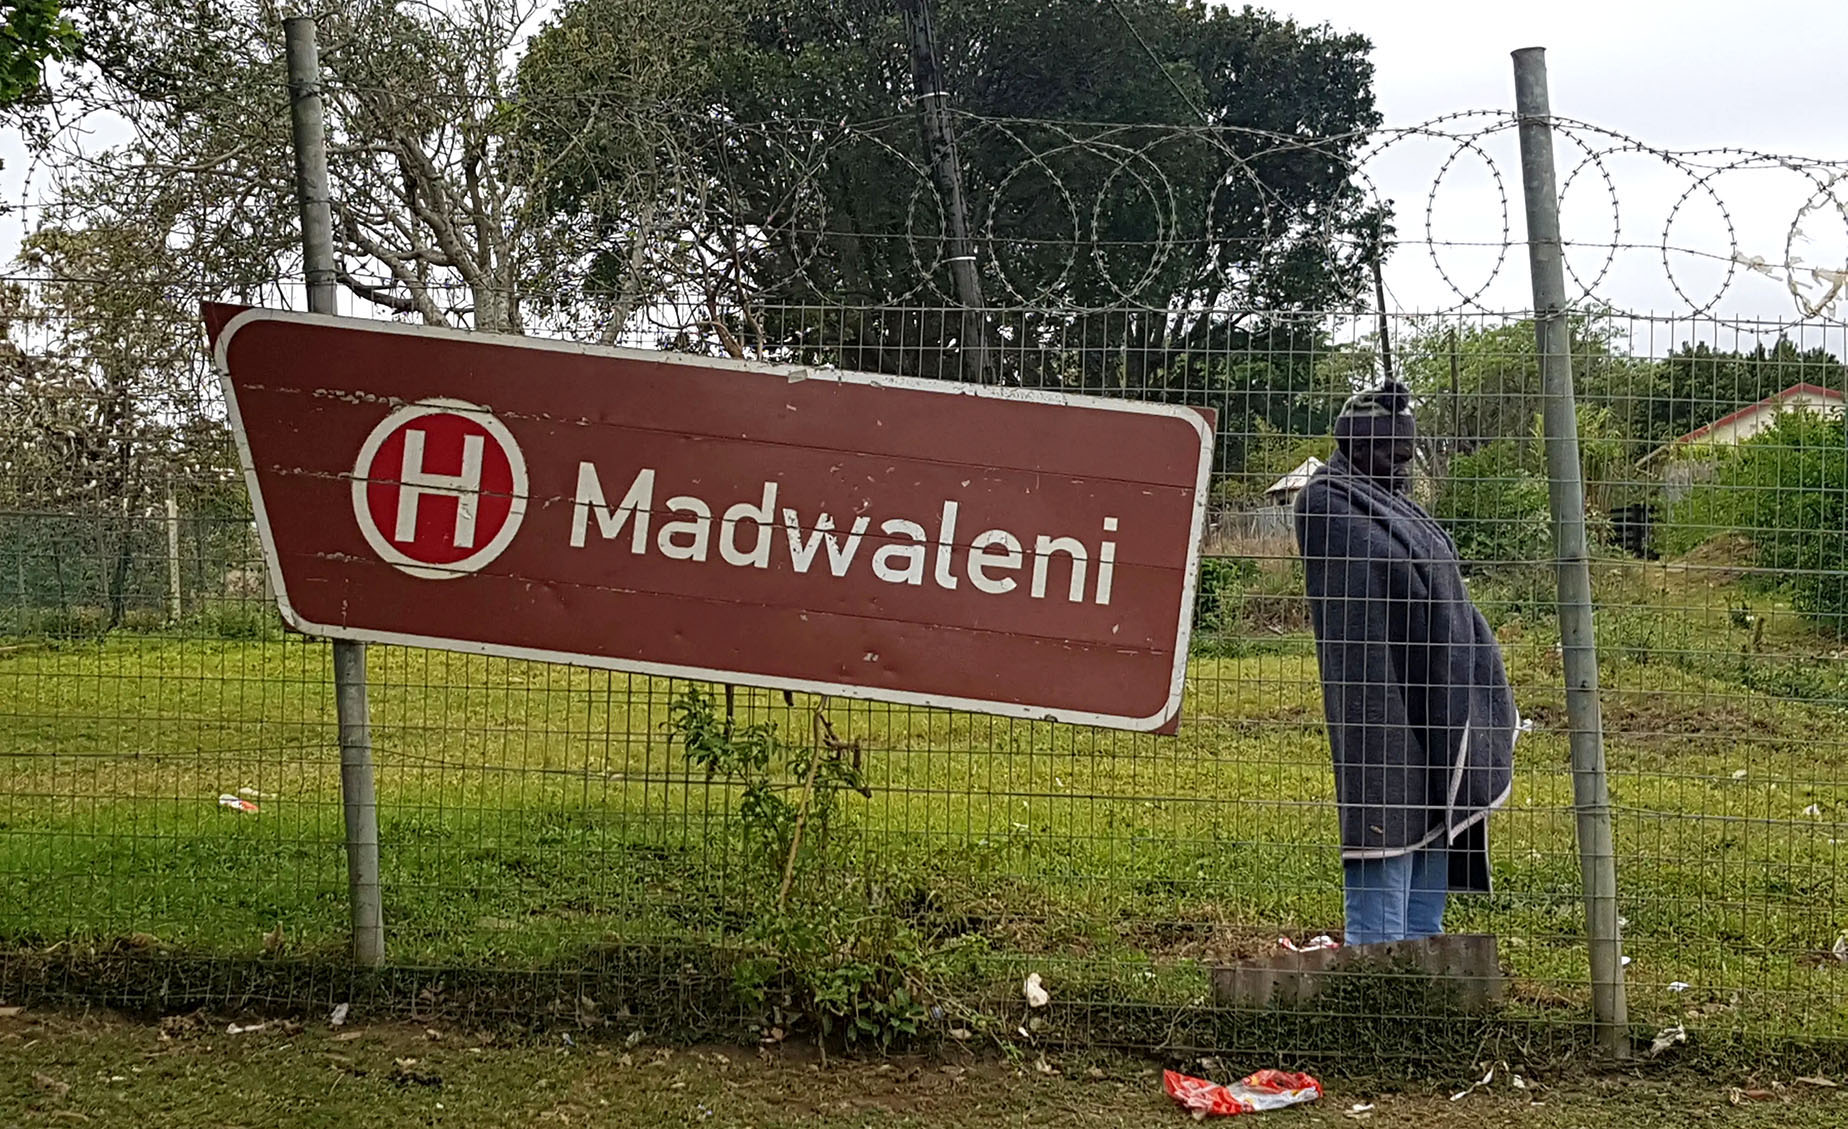 An image showing signage for Madwaleni Hospital 